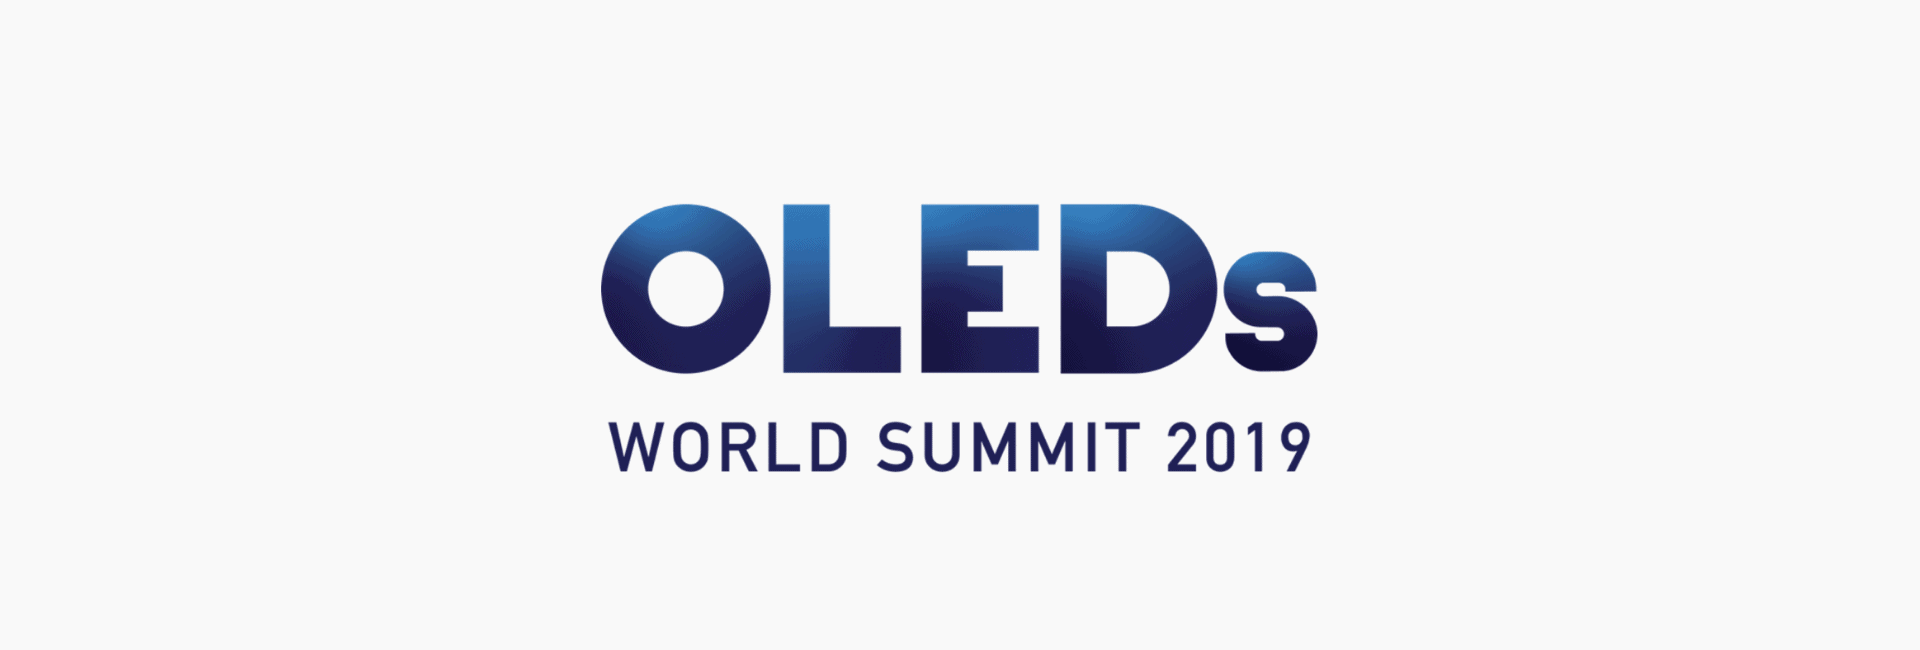 OLEDs World Summit Recap: Research, Collaboration, Blue Light Risk